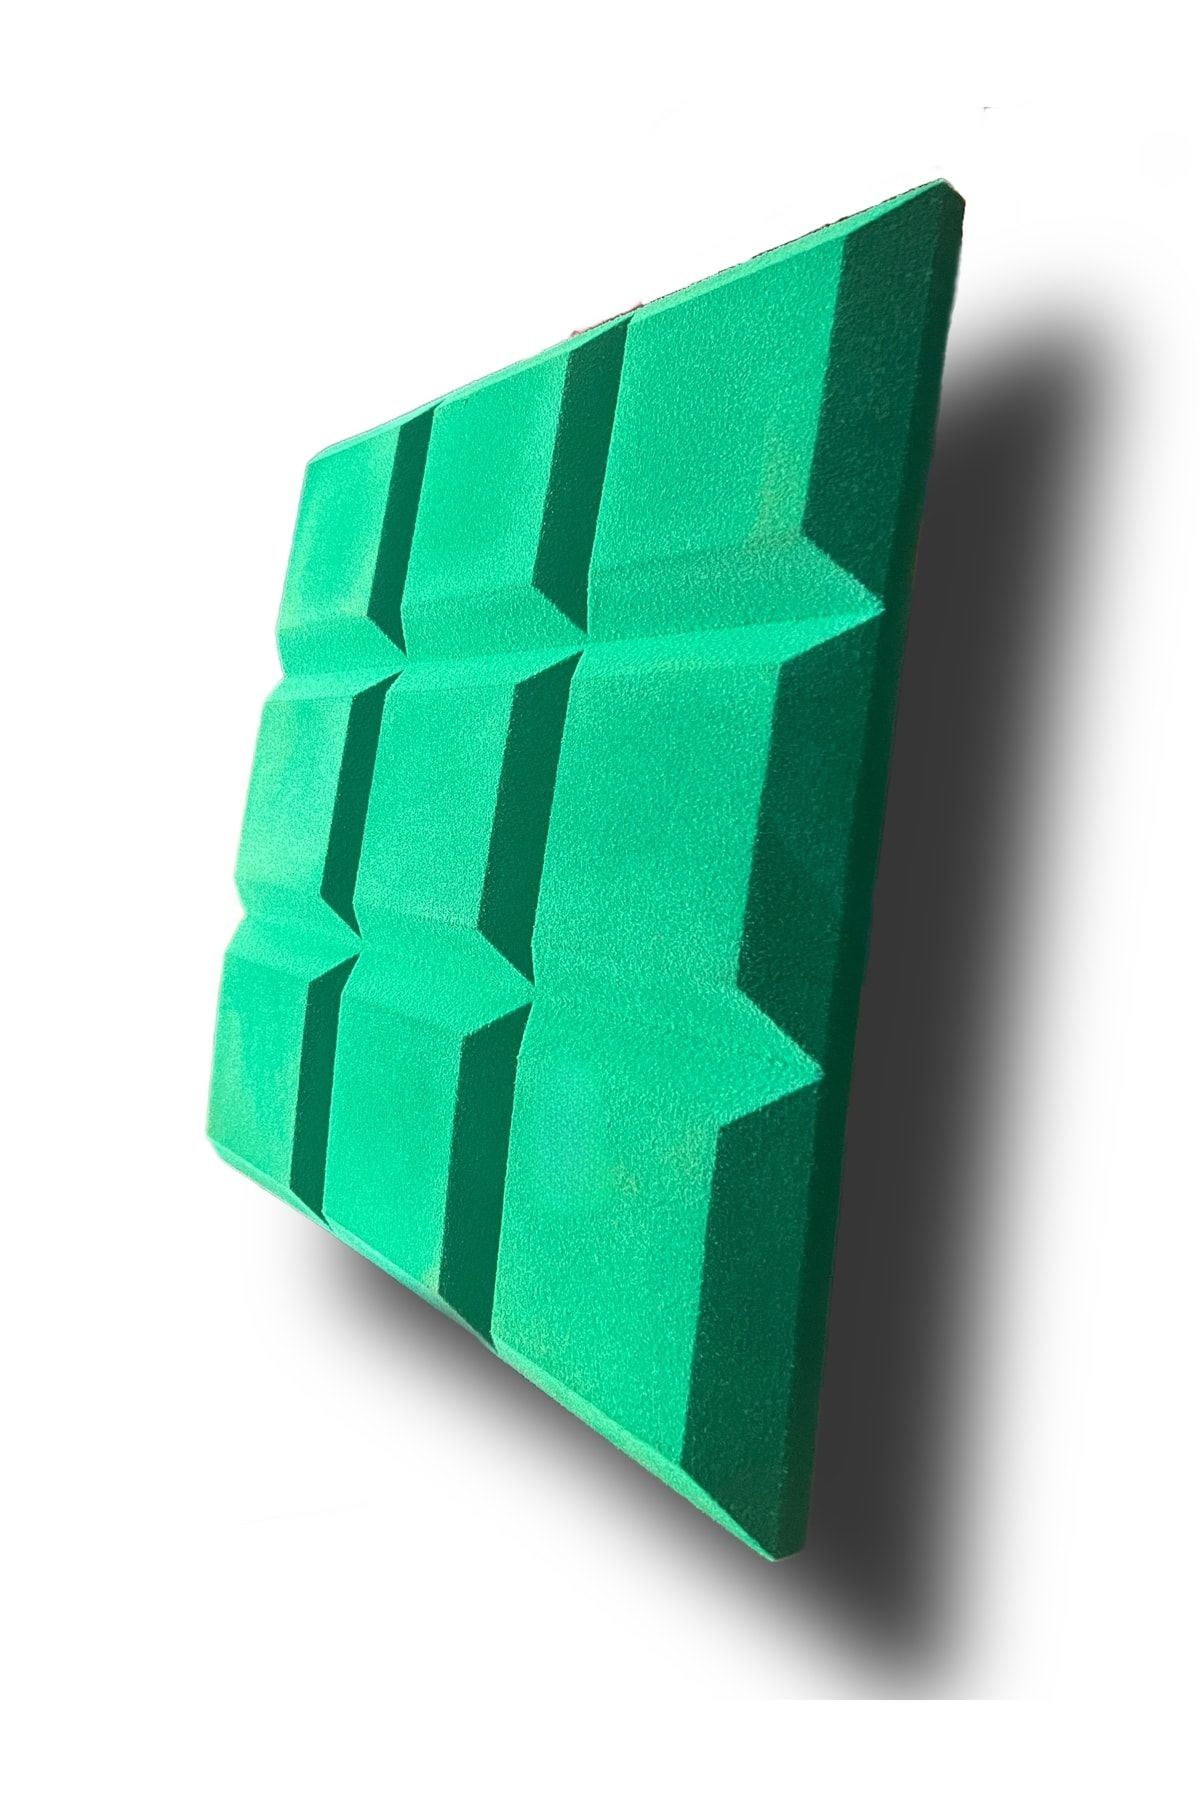 Ankases Ses Yalıtım Yeşil Kesik Piramit Akustik Sünger Panel 50x50cm Kalınlık 40mm